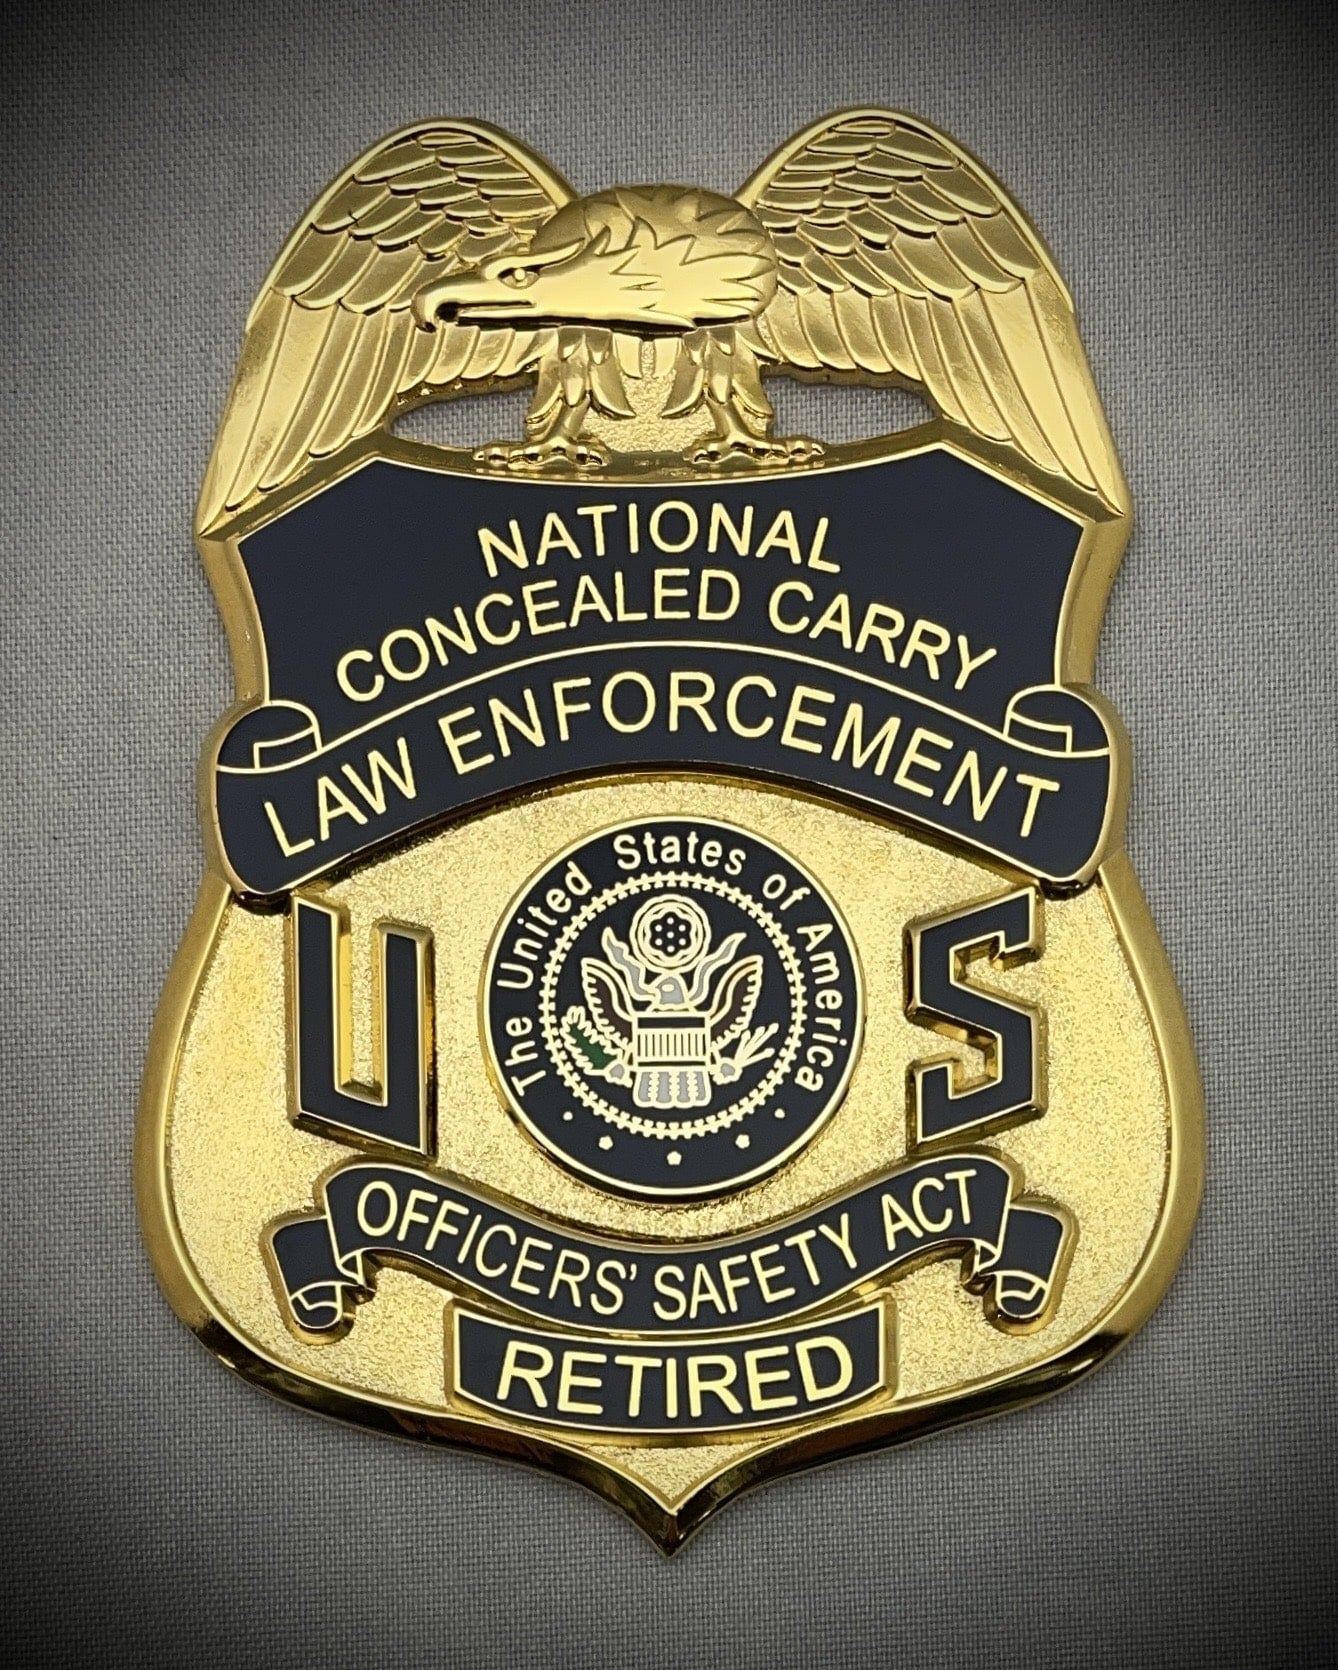 National Concealed Carry Law Enforcement Badge with leather belt clip holder